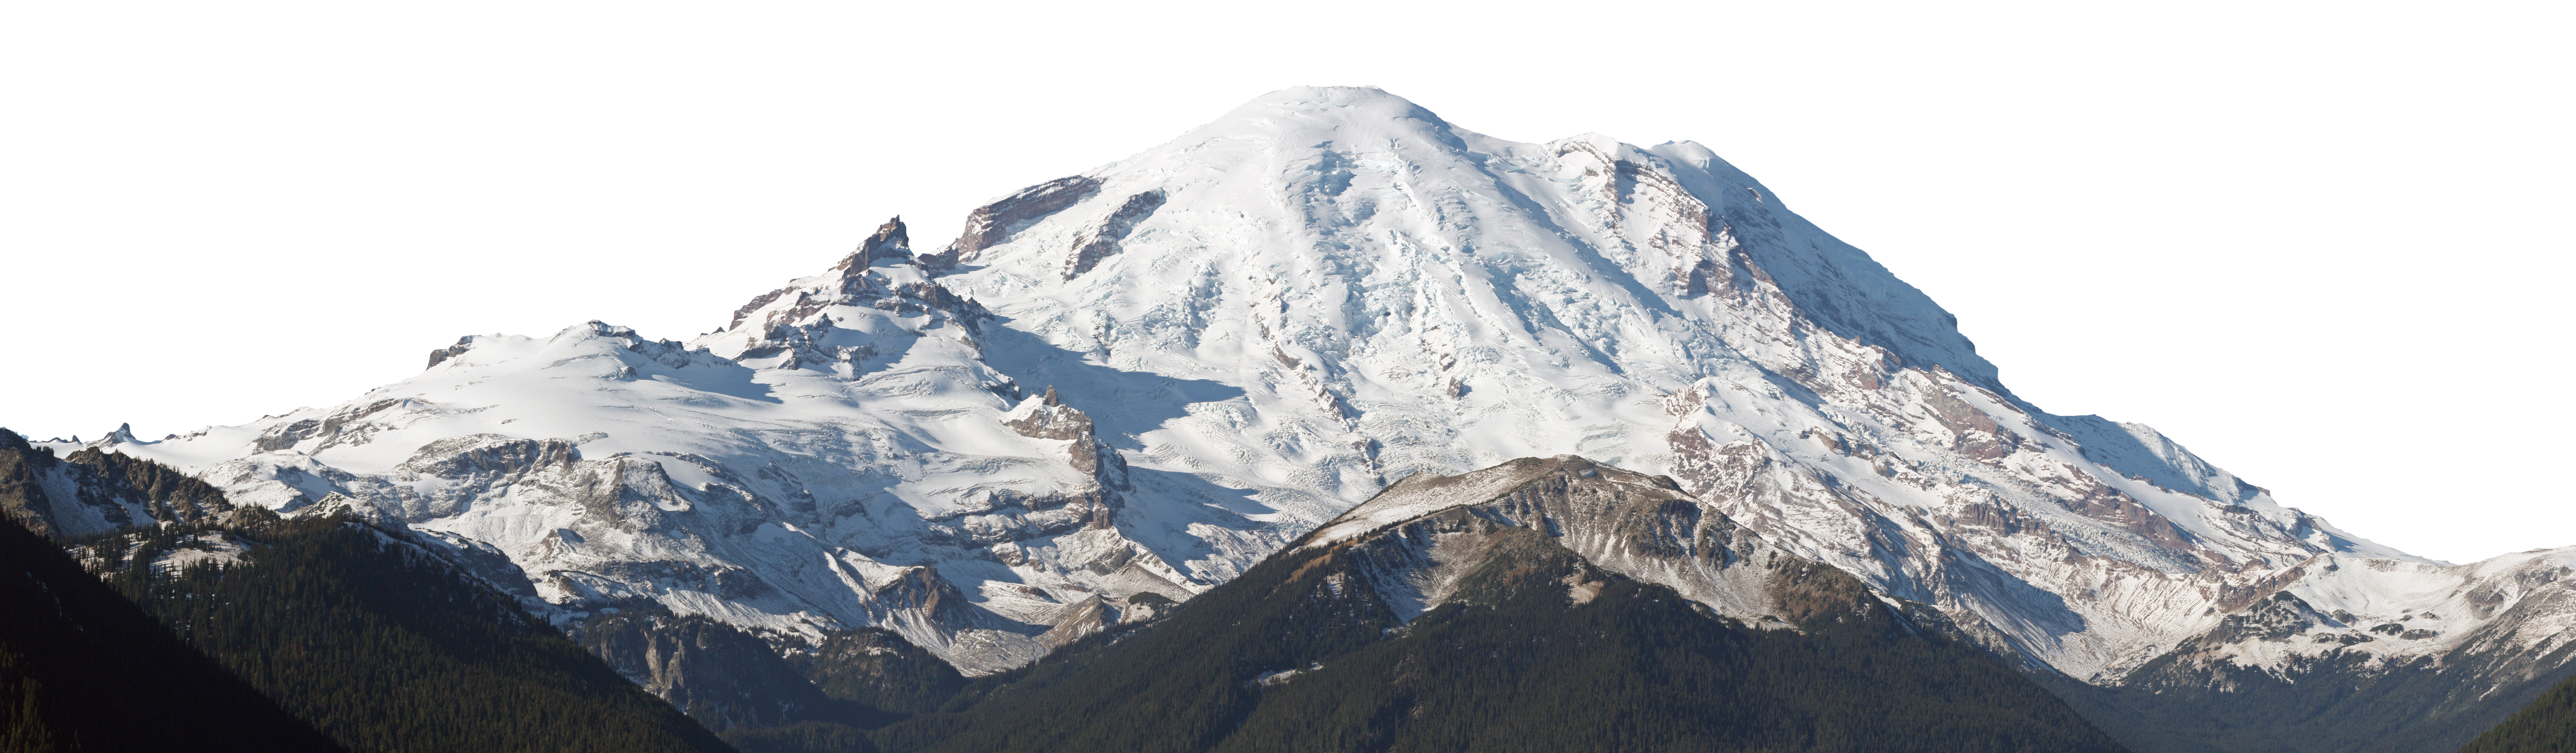 glacier clipart snow mountain